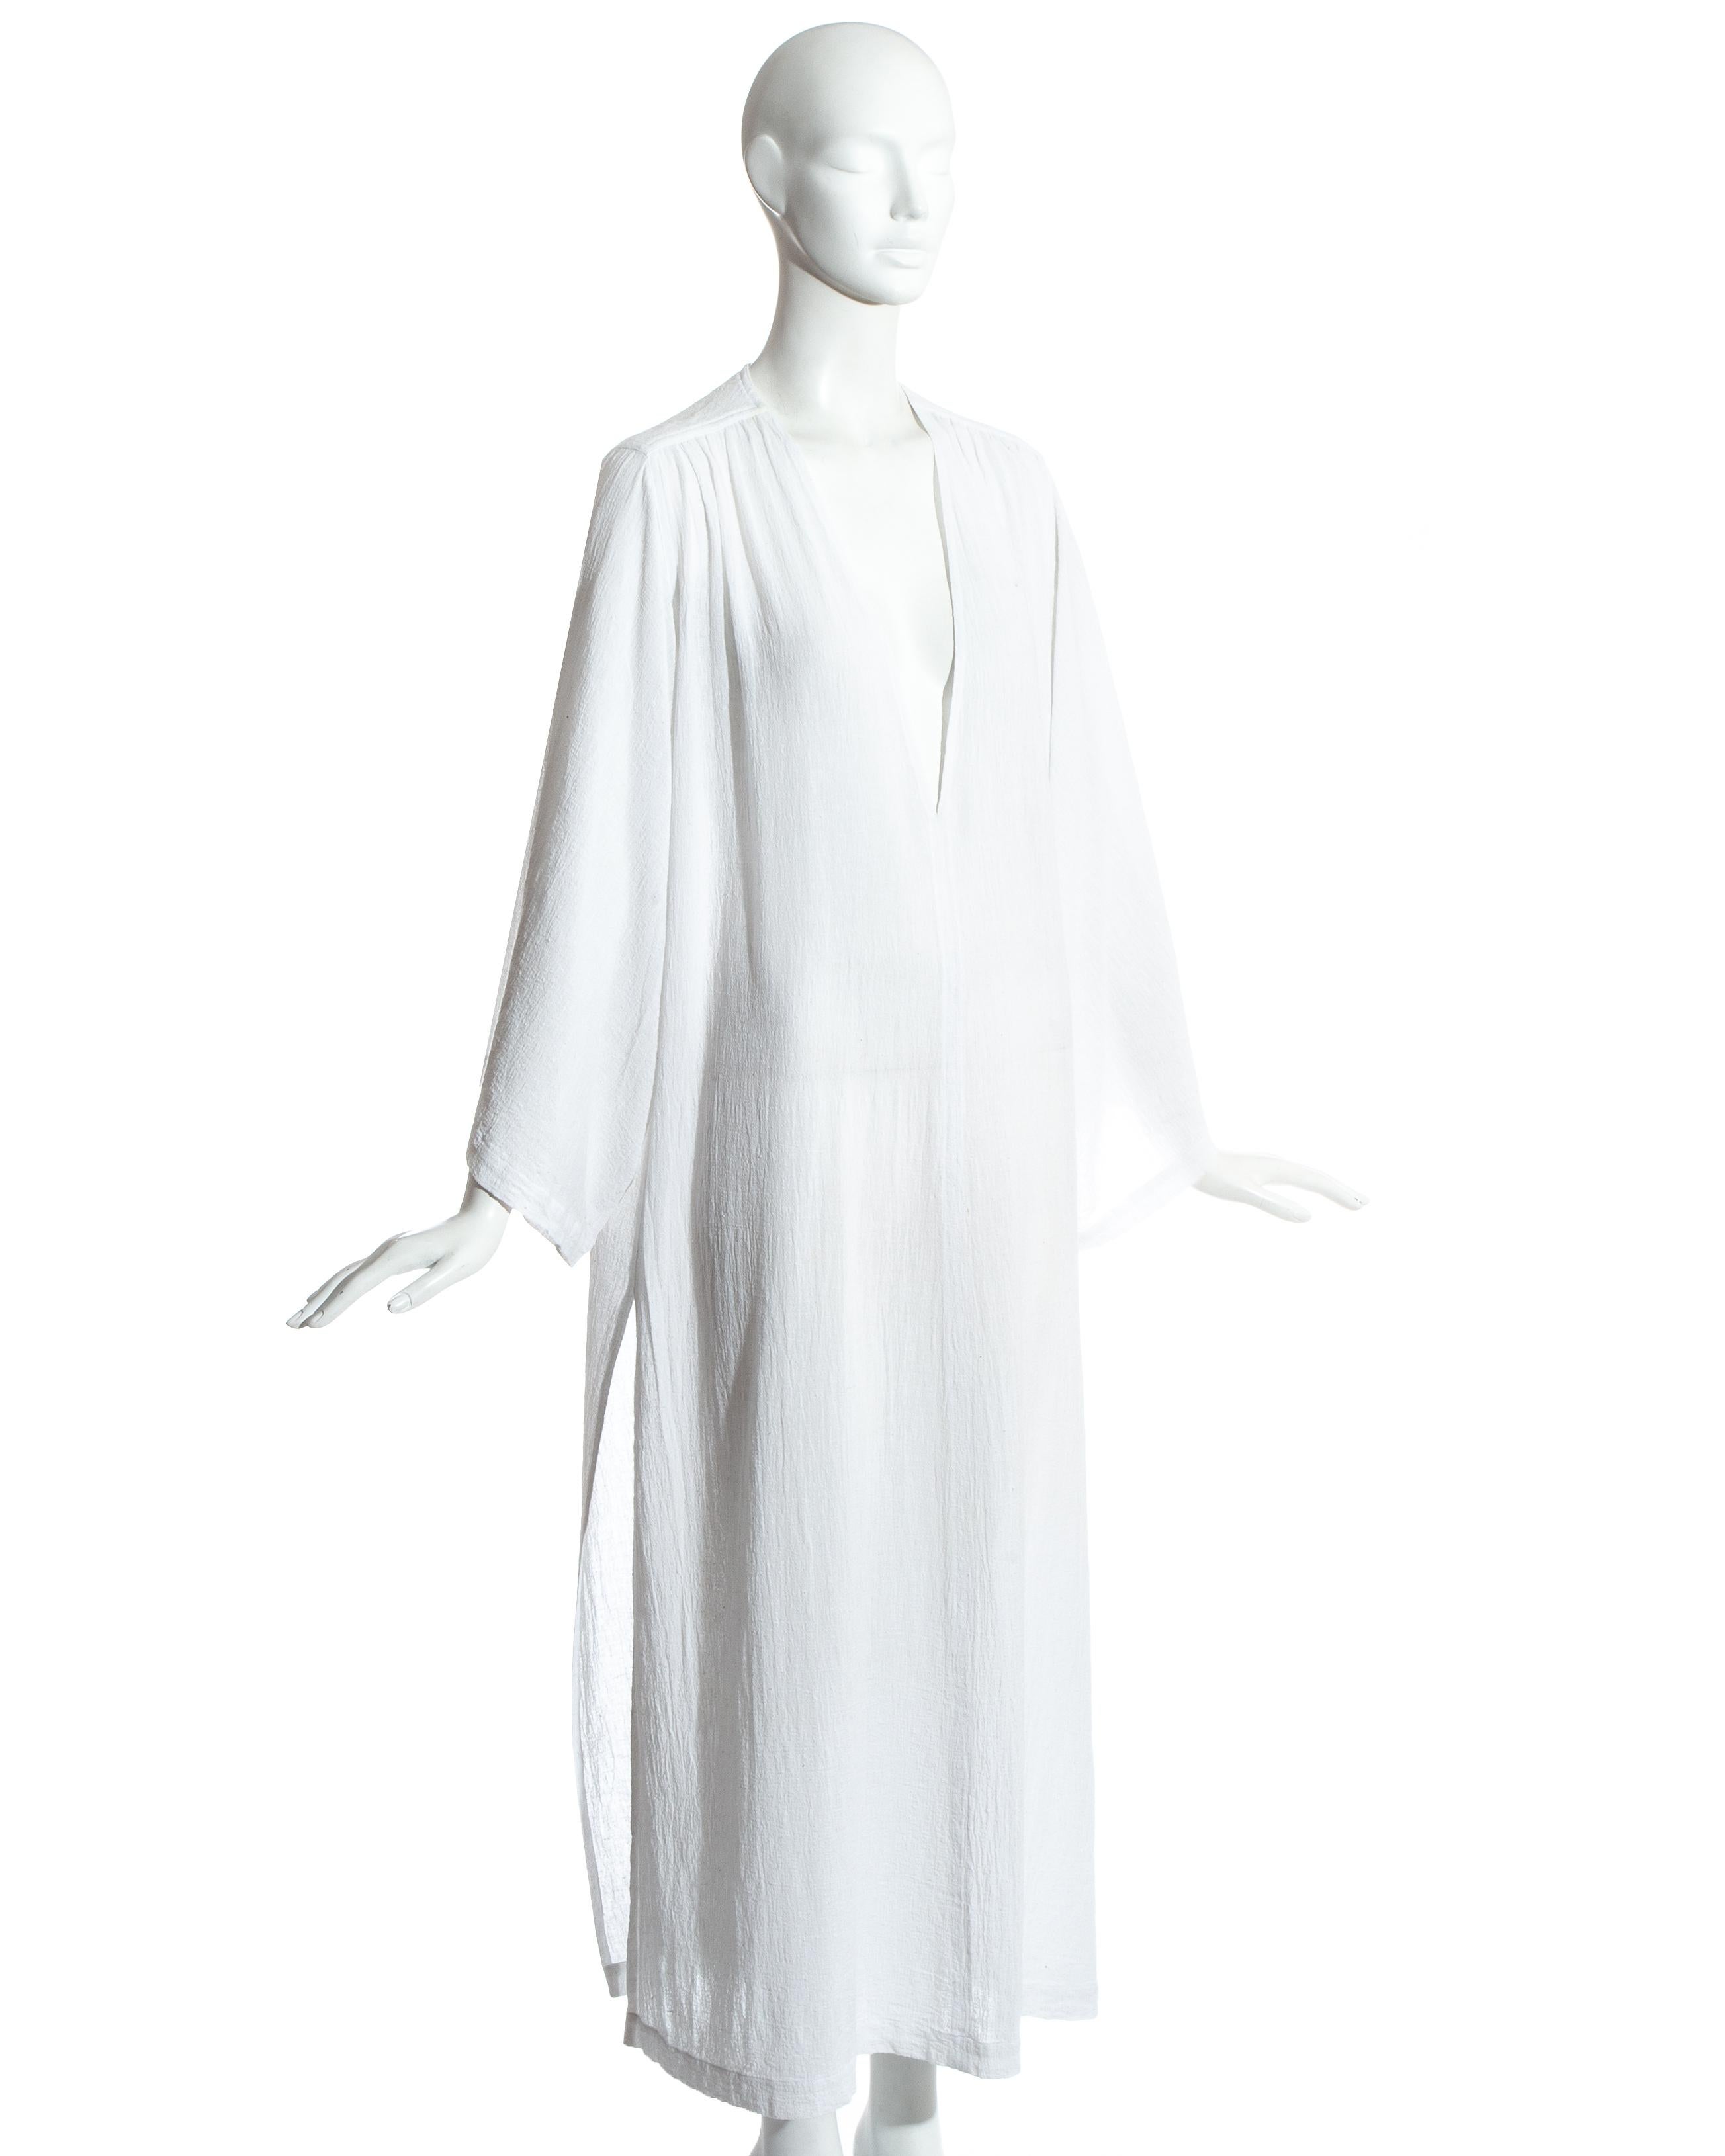 Gray Yves Saint Laurent white cotton caftan, c. 1970s